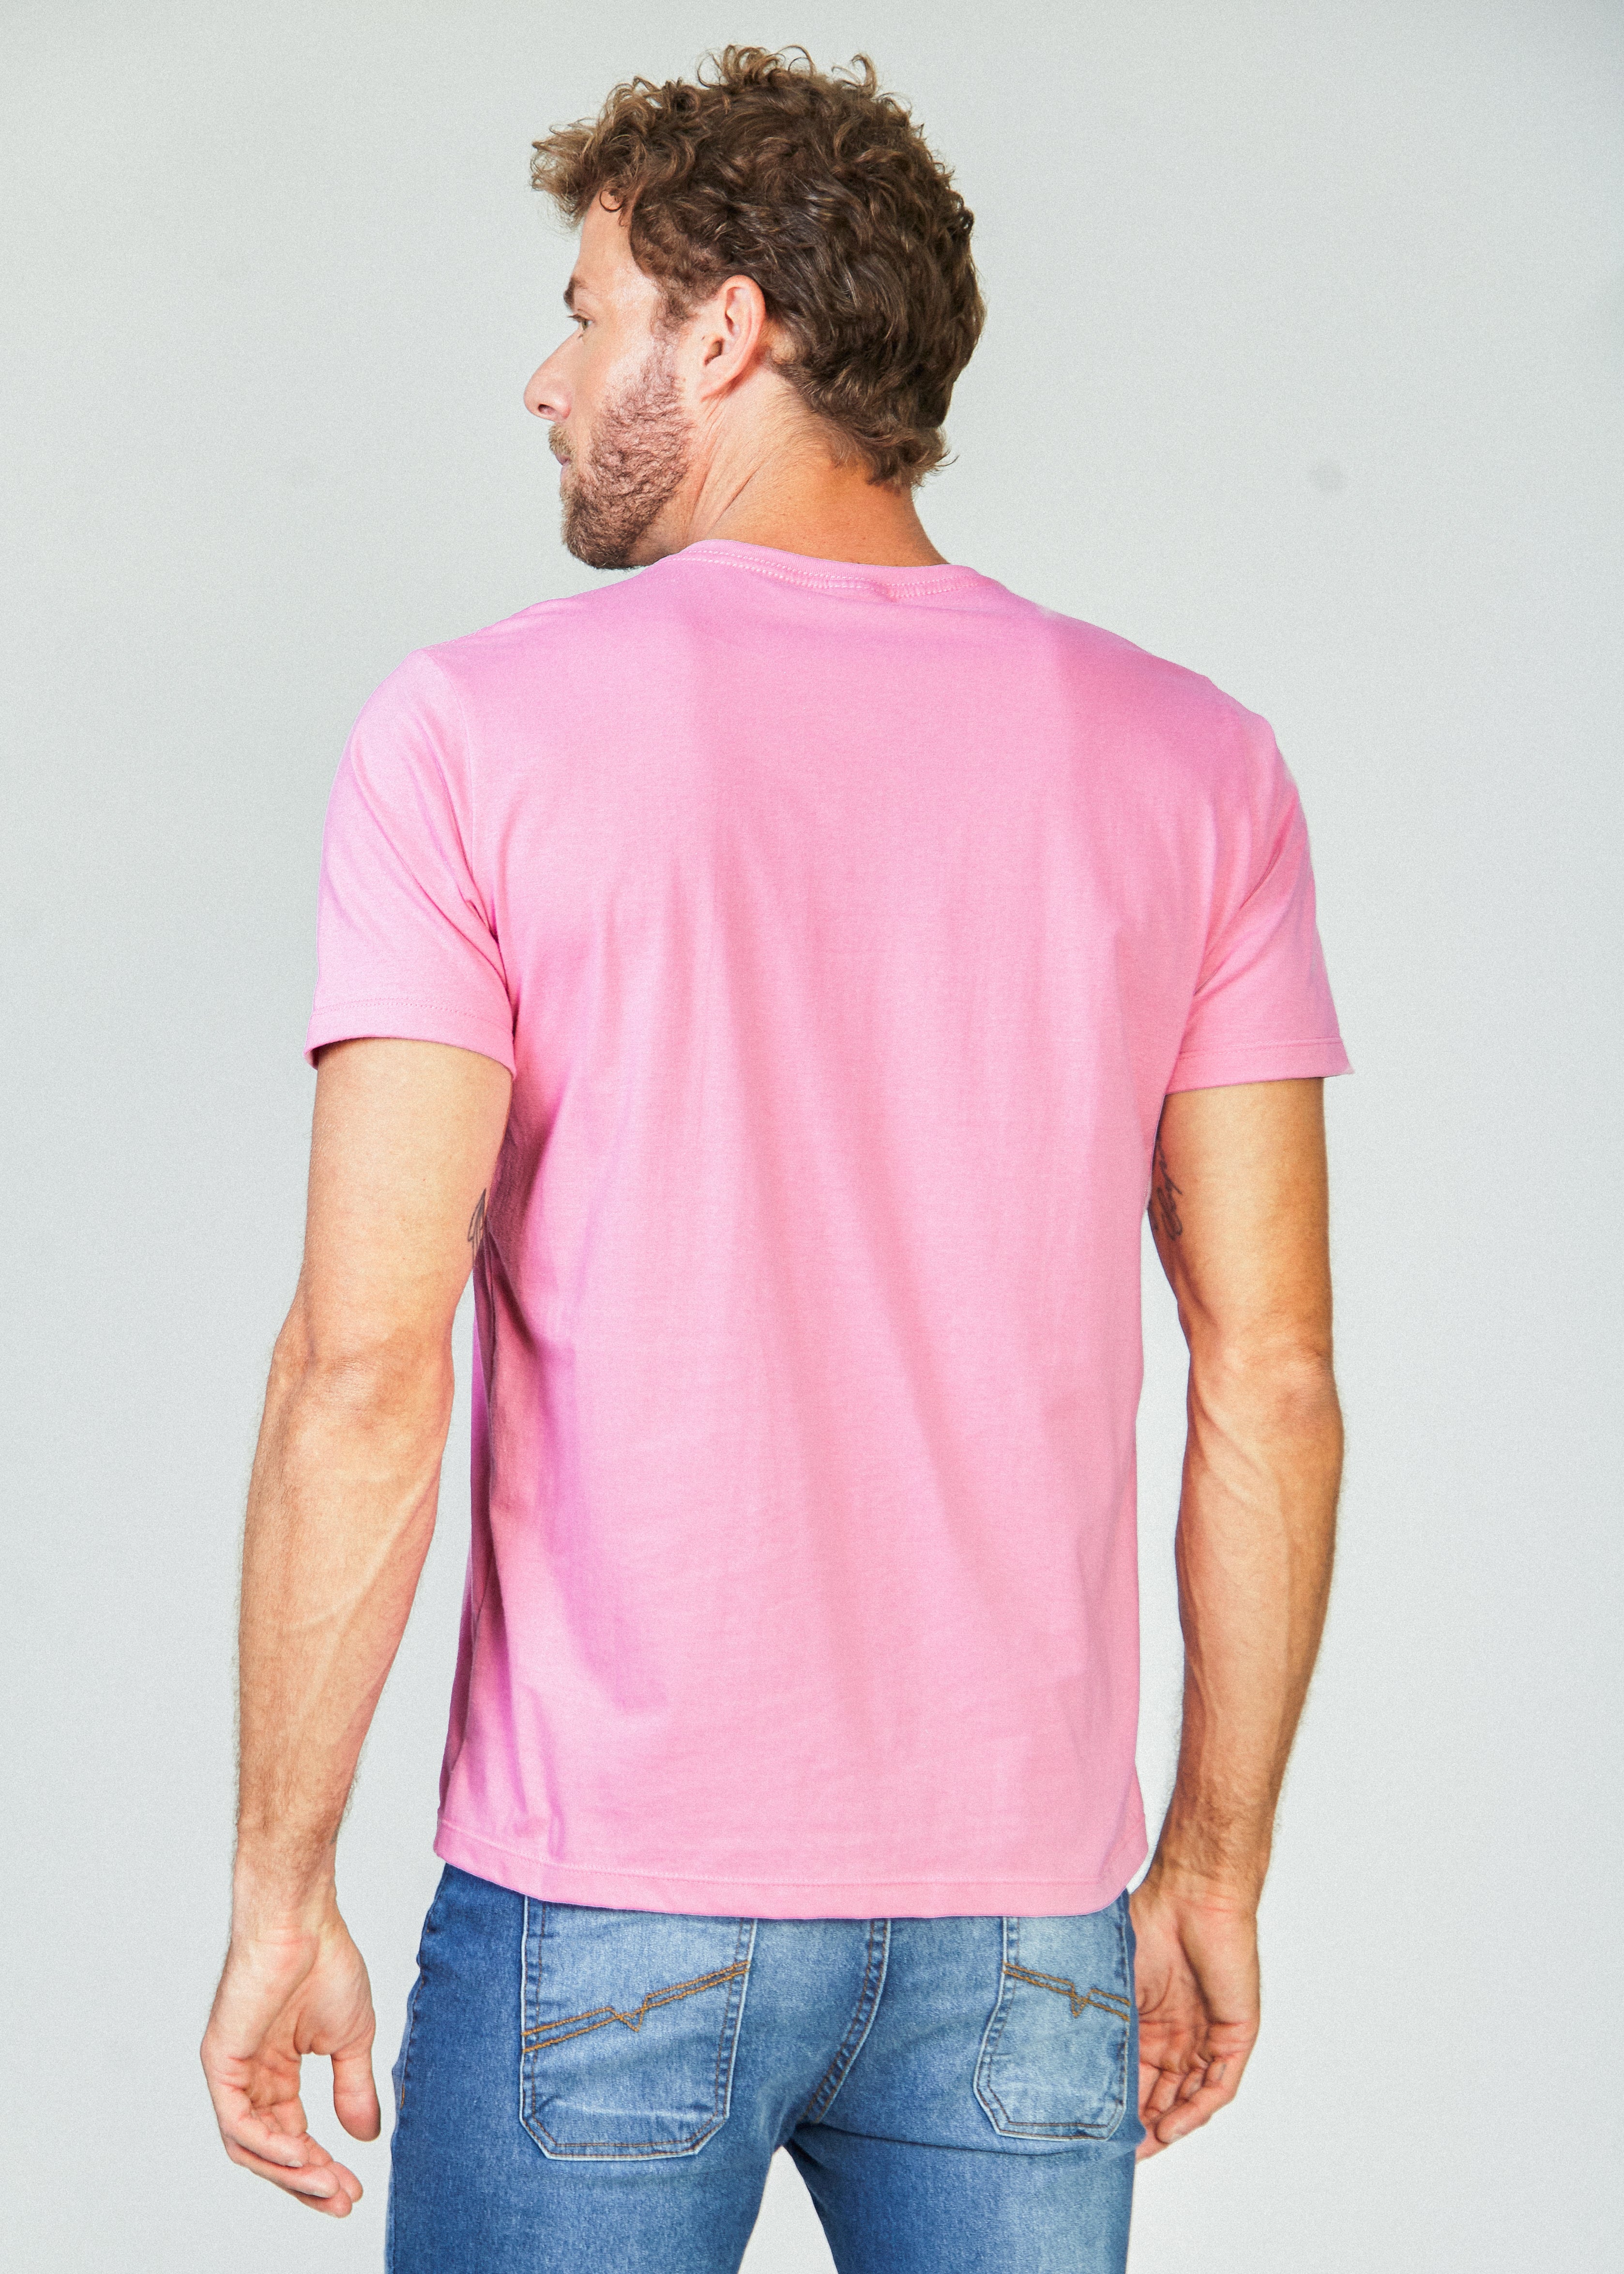 Camiseta Básica - Rosa